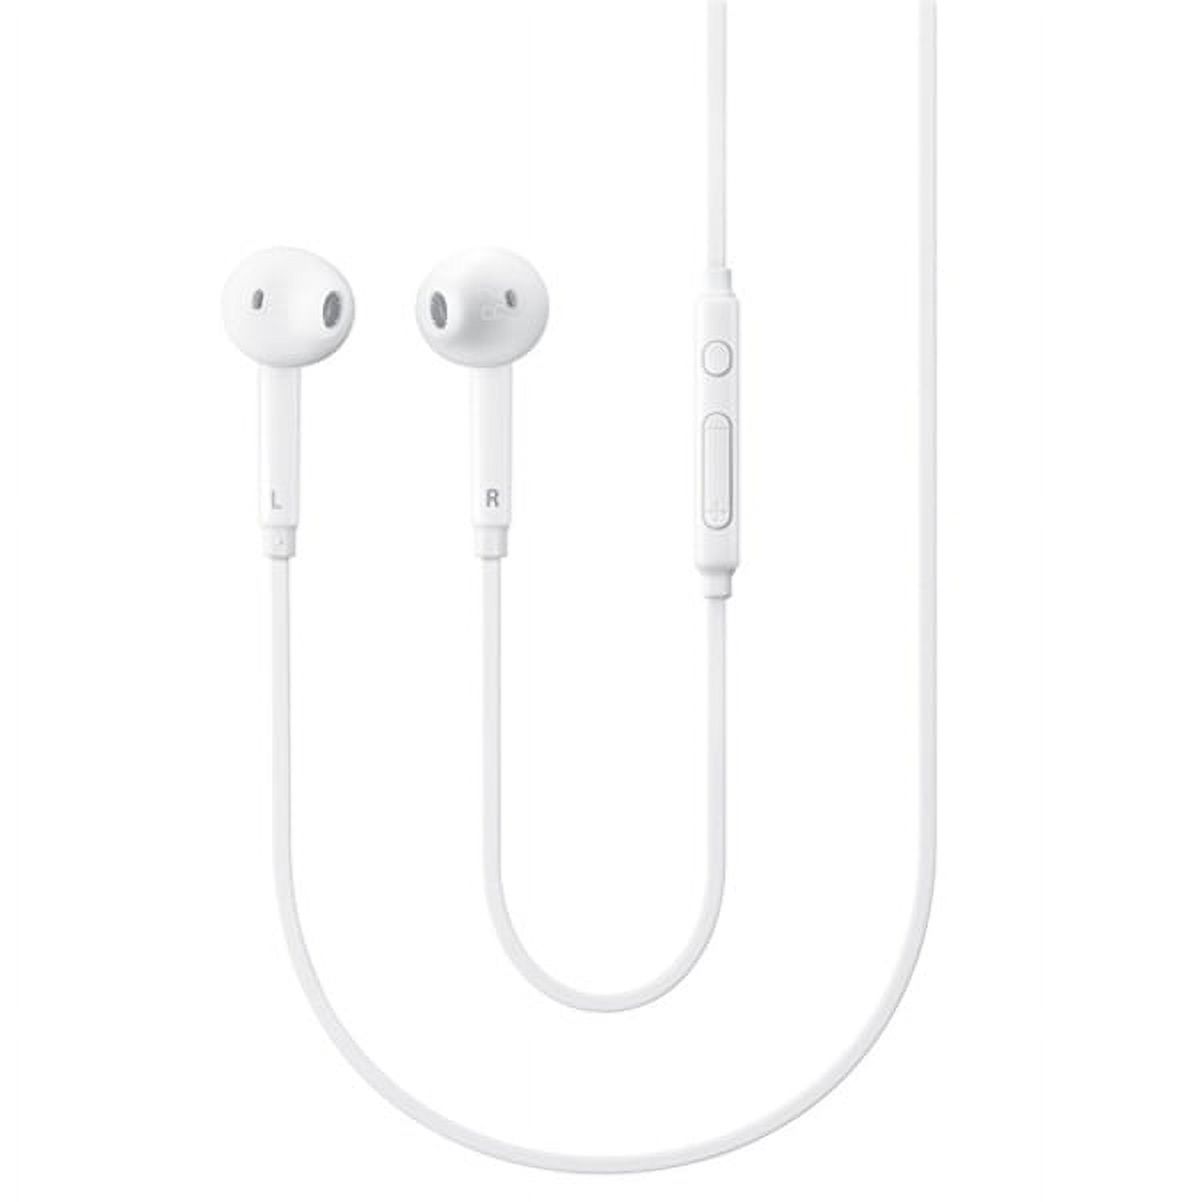 AWAccessory In-Ear Headphones, White, S27-JODOJA - image 3 of 6